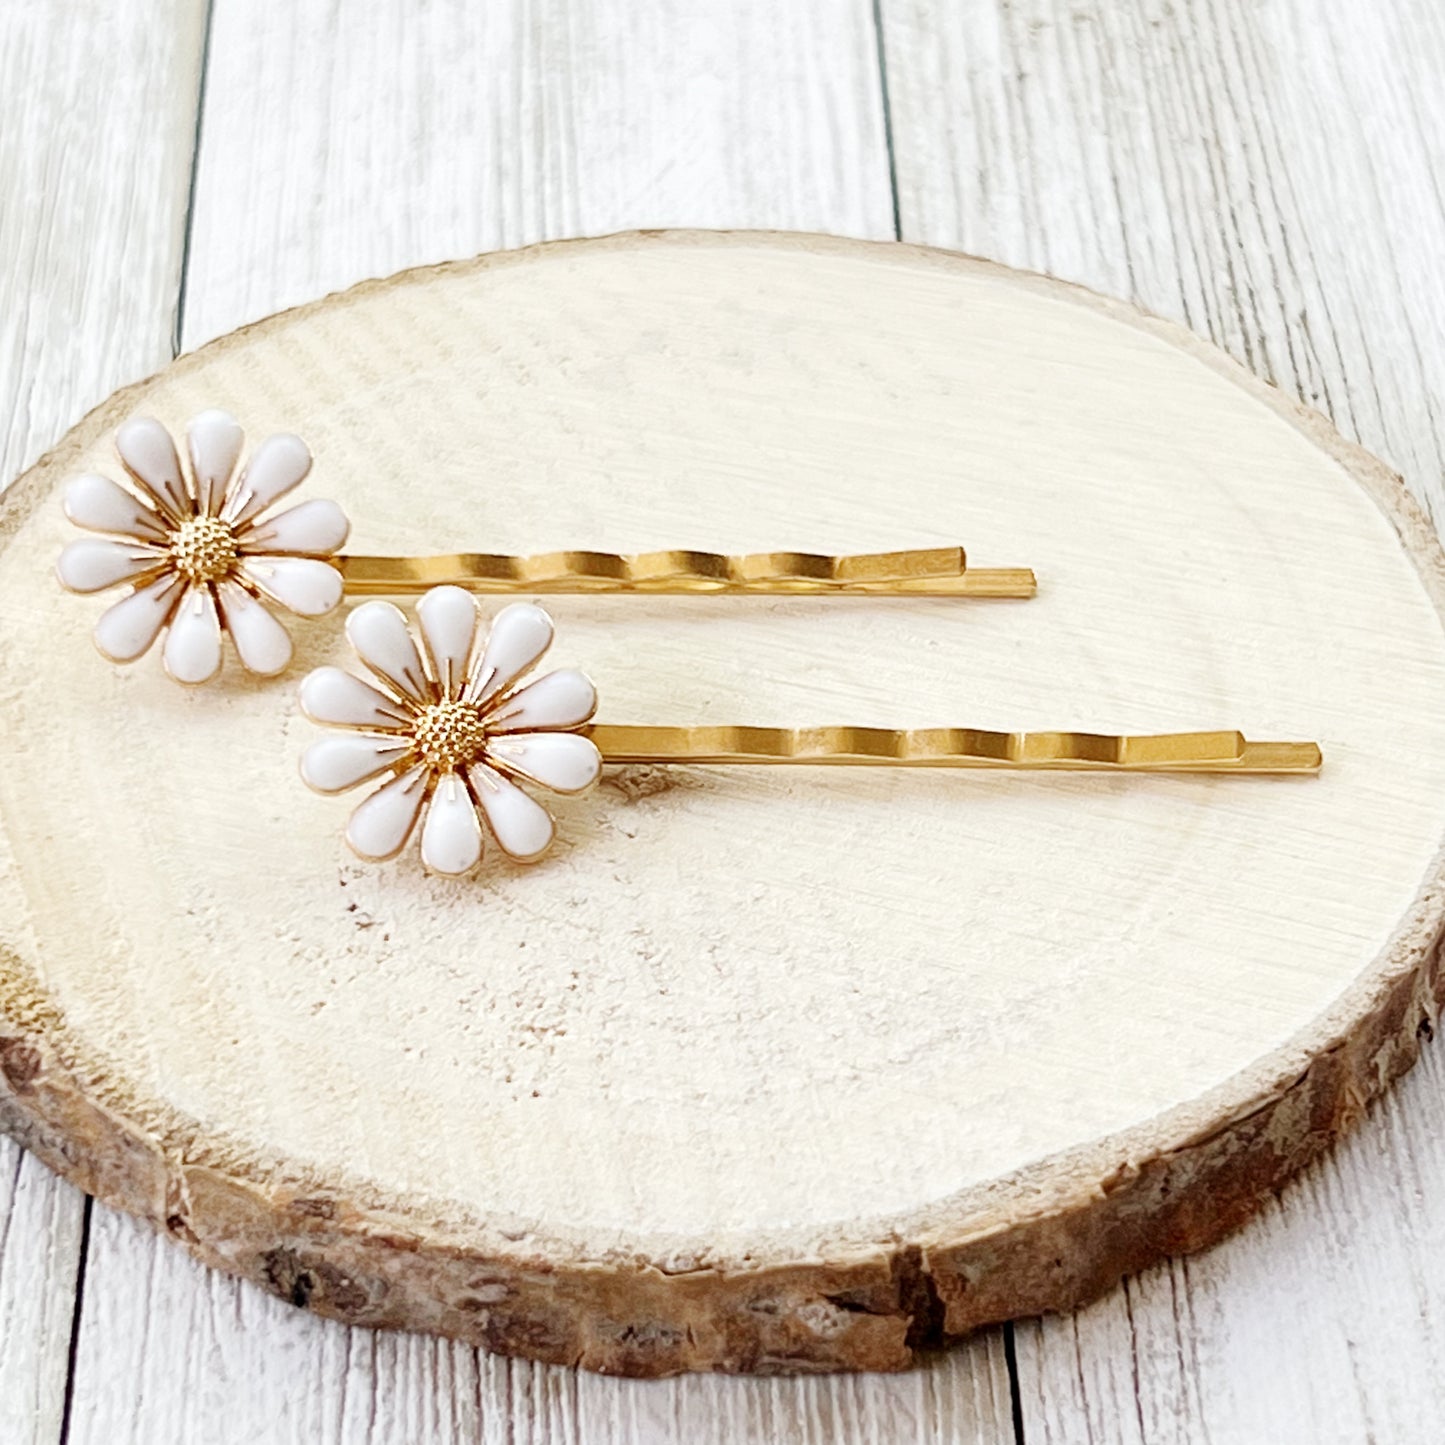 White Flower Decorative Hair Pins